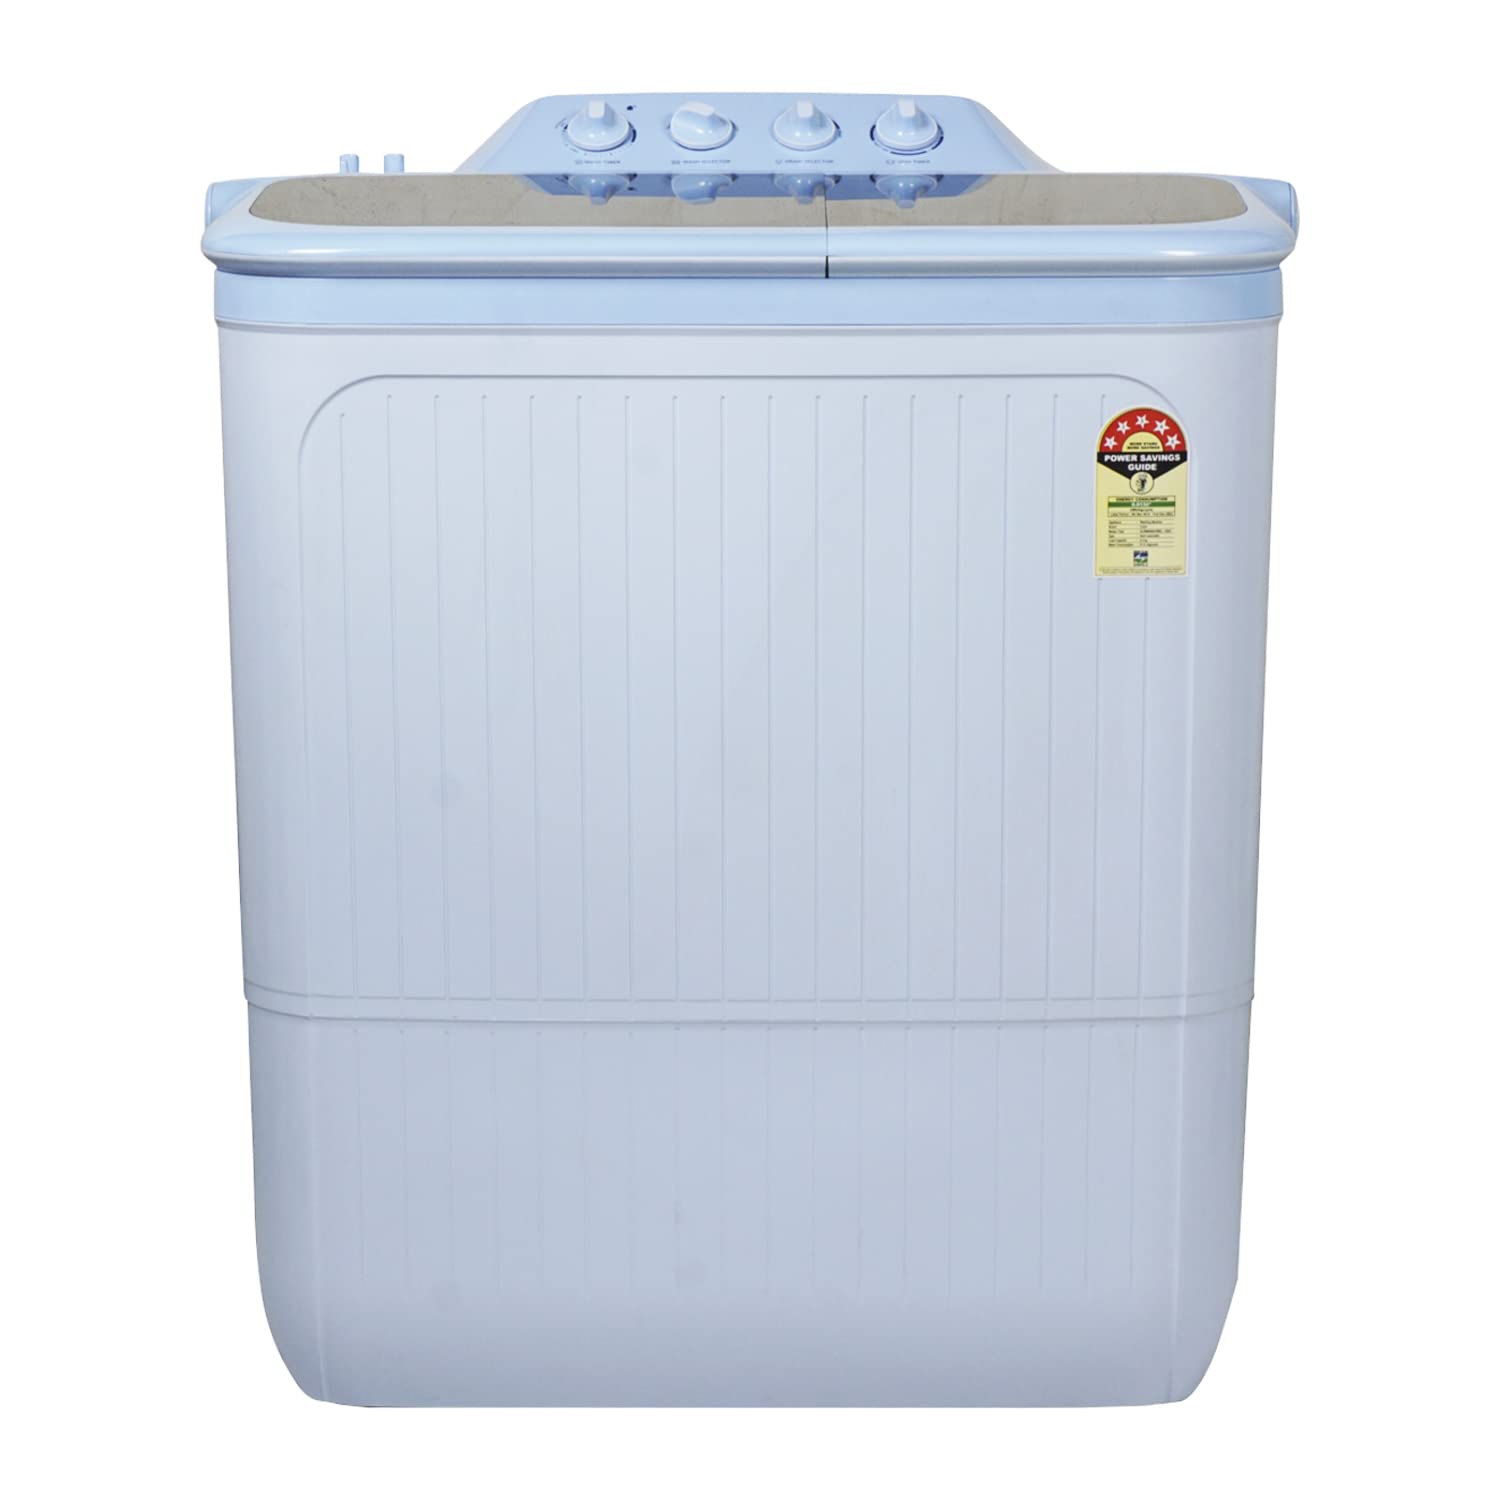 Lloyd 8 Kg 5 Star Semi-Automatic Top Load Washing Machine (GLWMS80APBEL, Pastel Blue ) - Mahajan Electronics Online